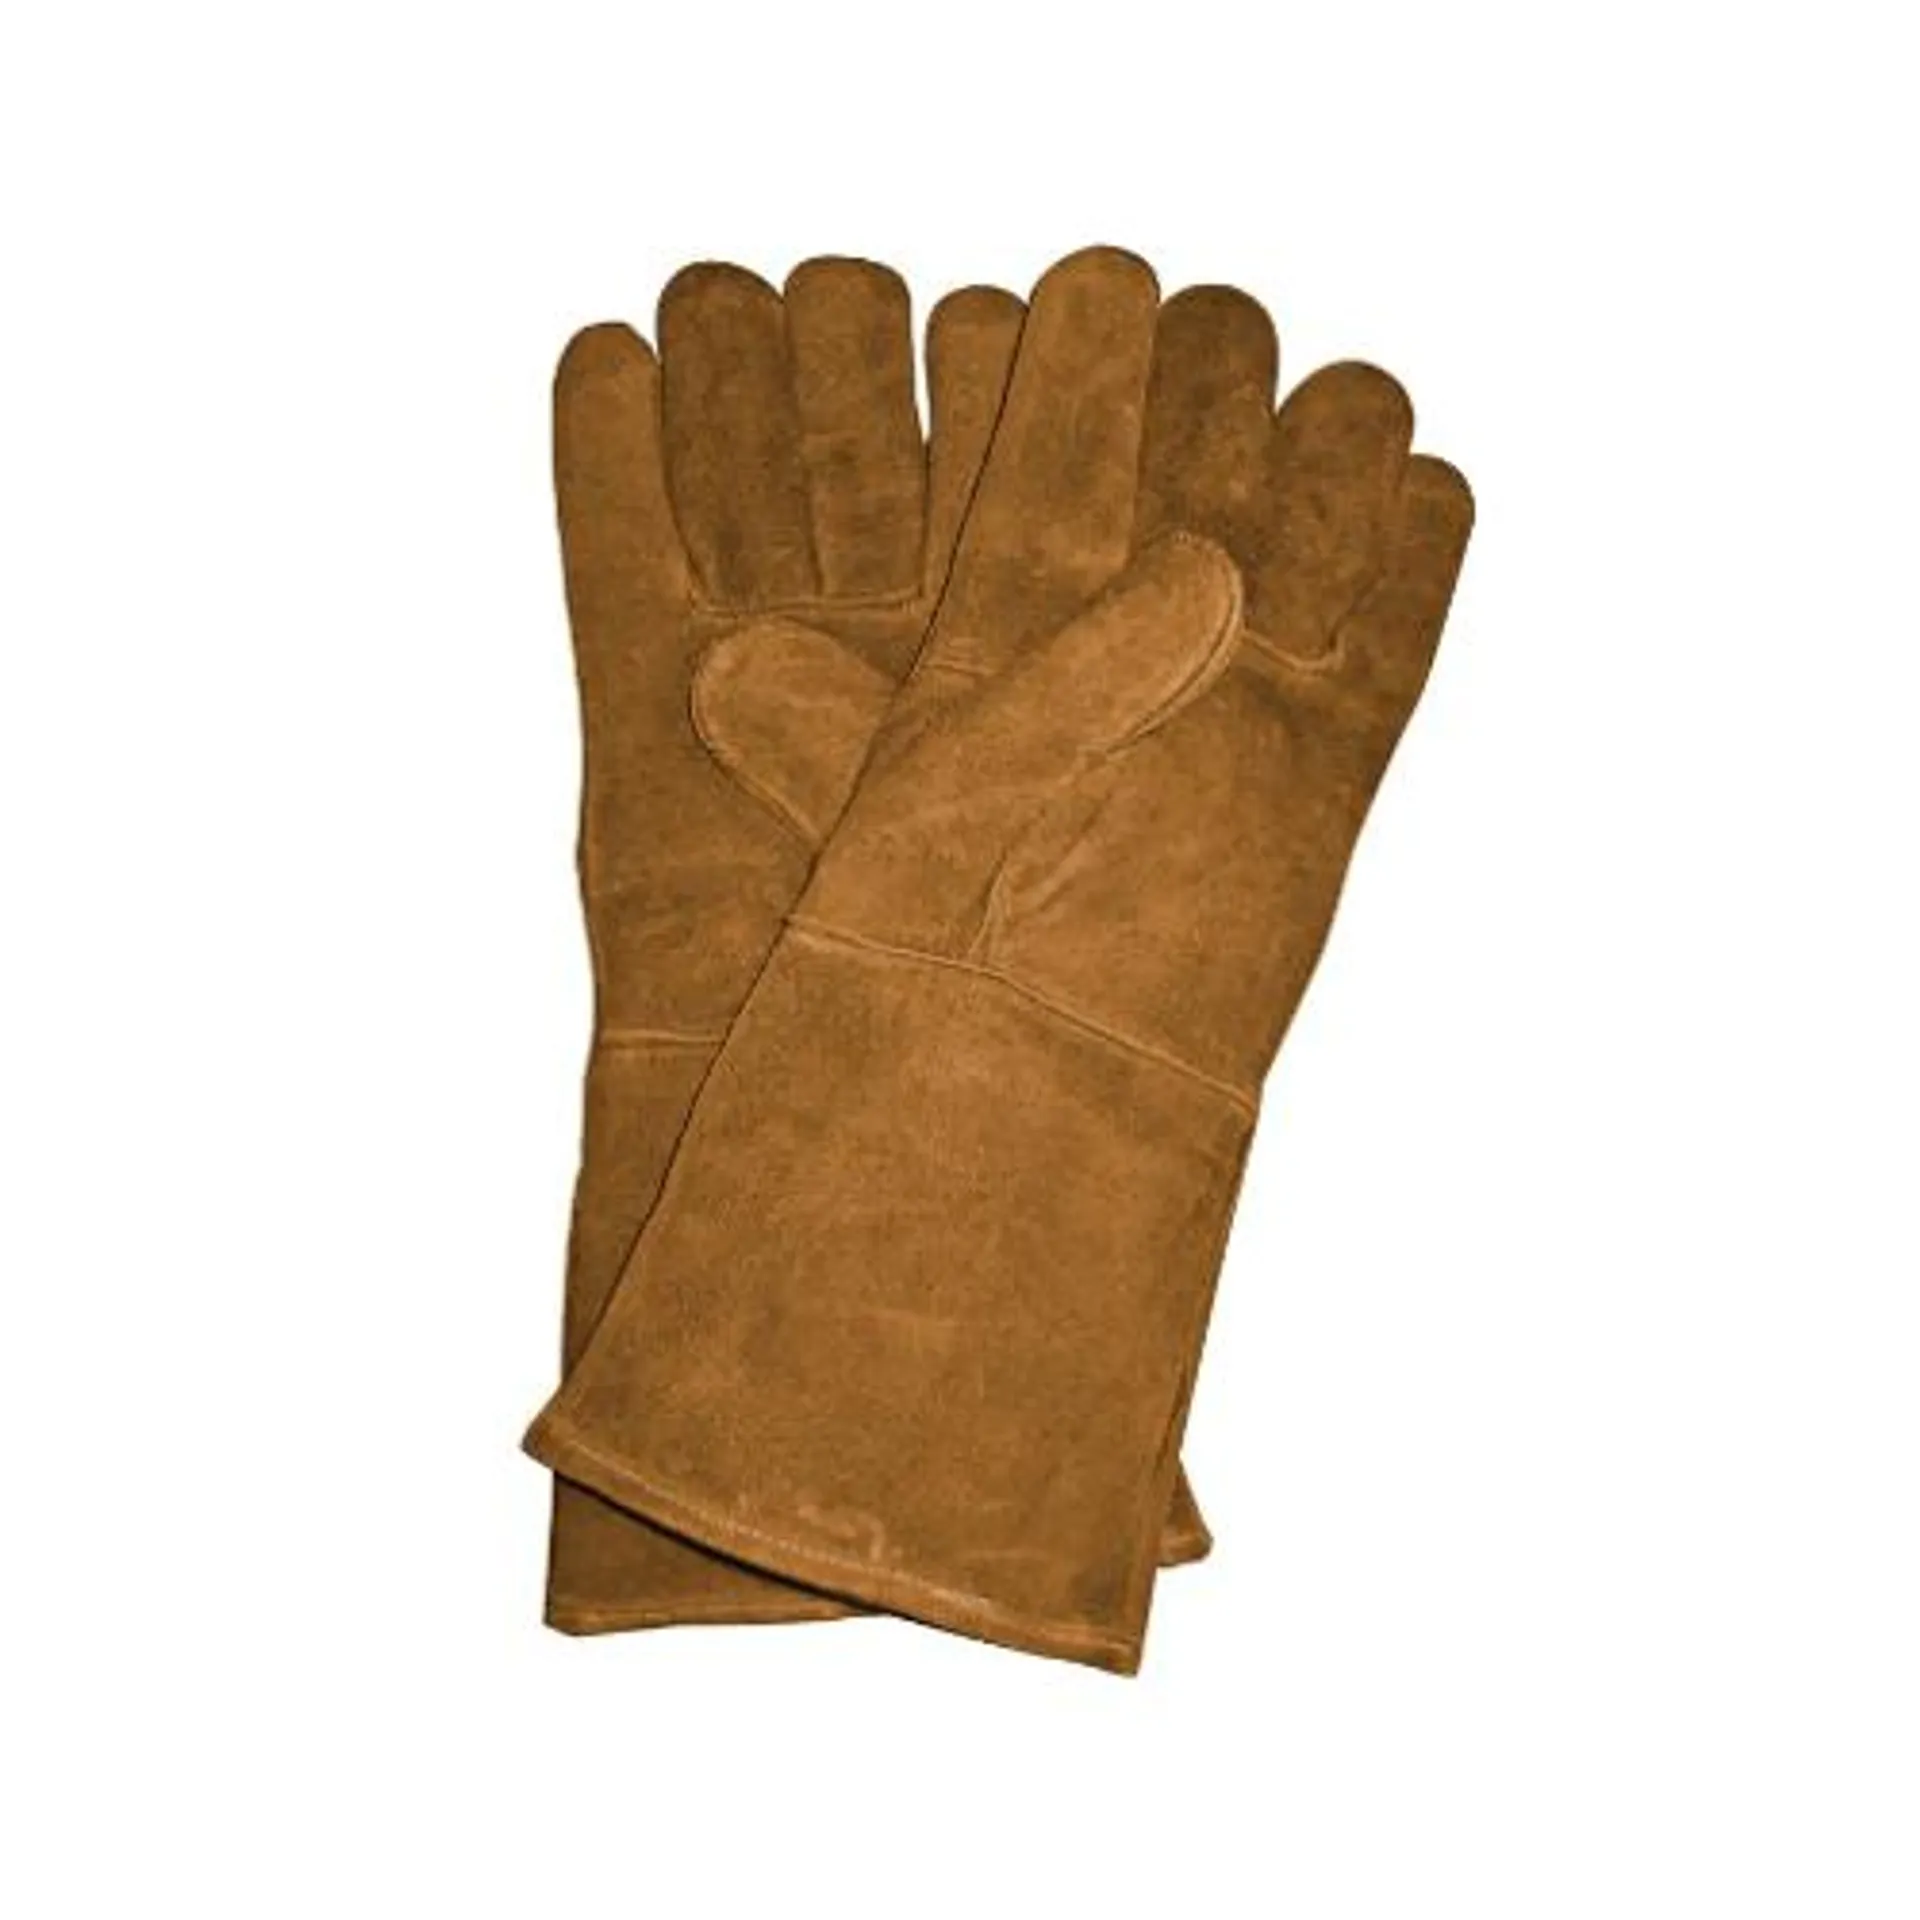 Panacea Fireplace Gloves